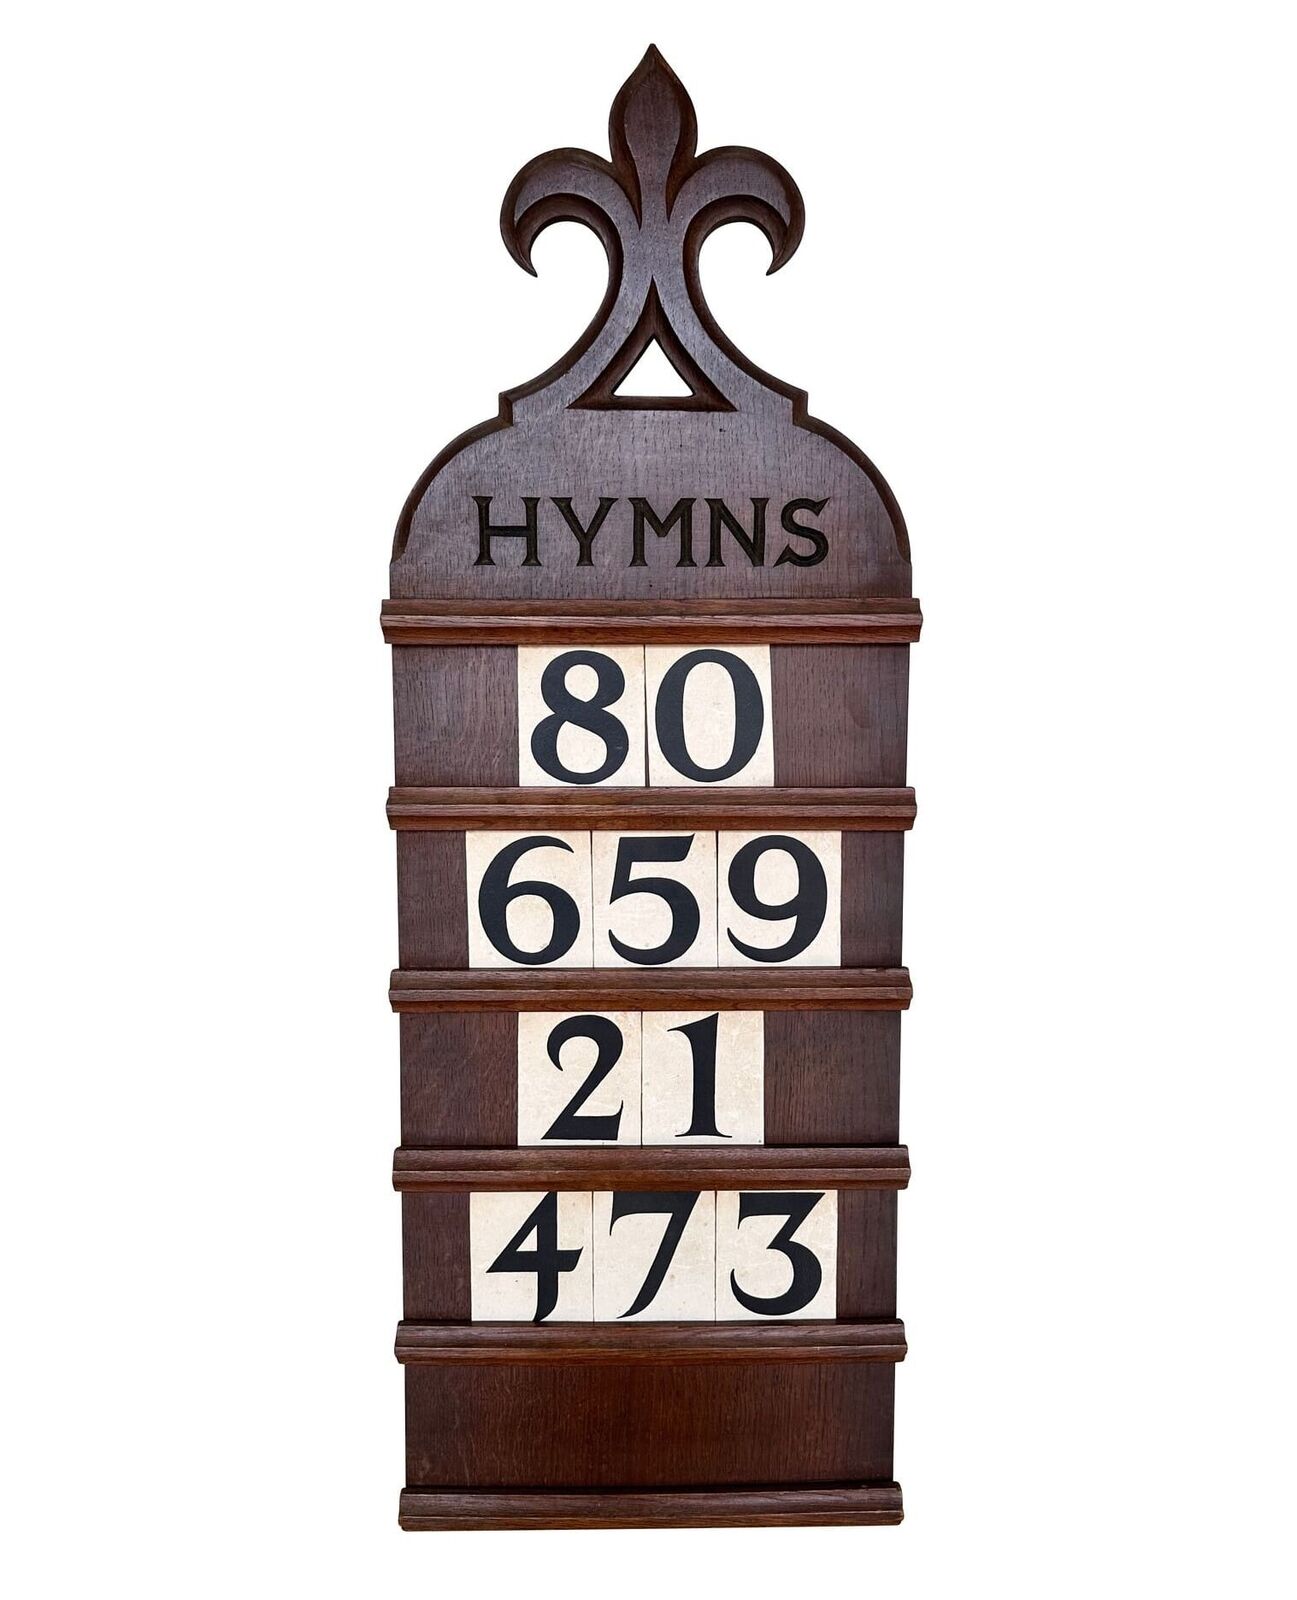 Original Victorian Church Hymn Board - Old Religious Antiques - Specials Board